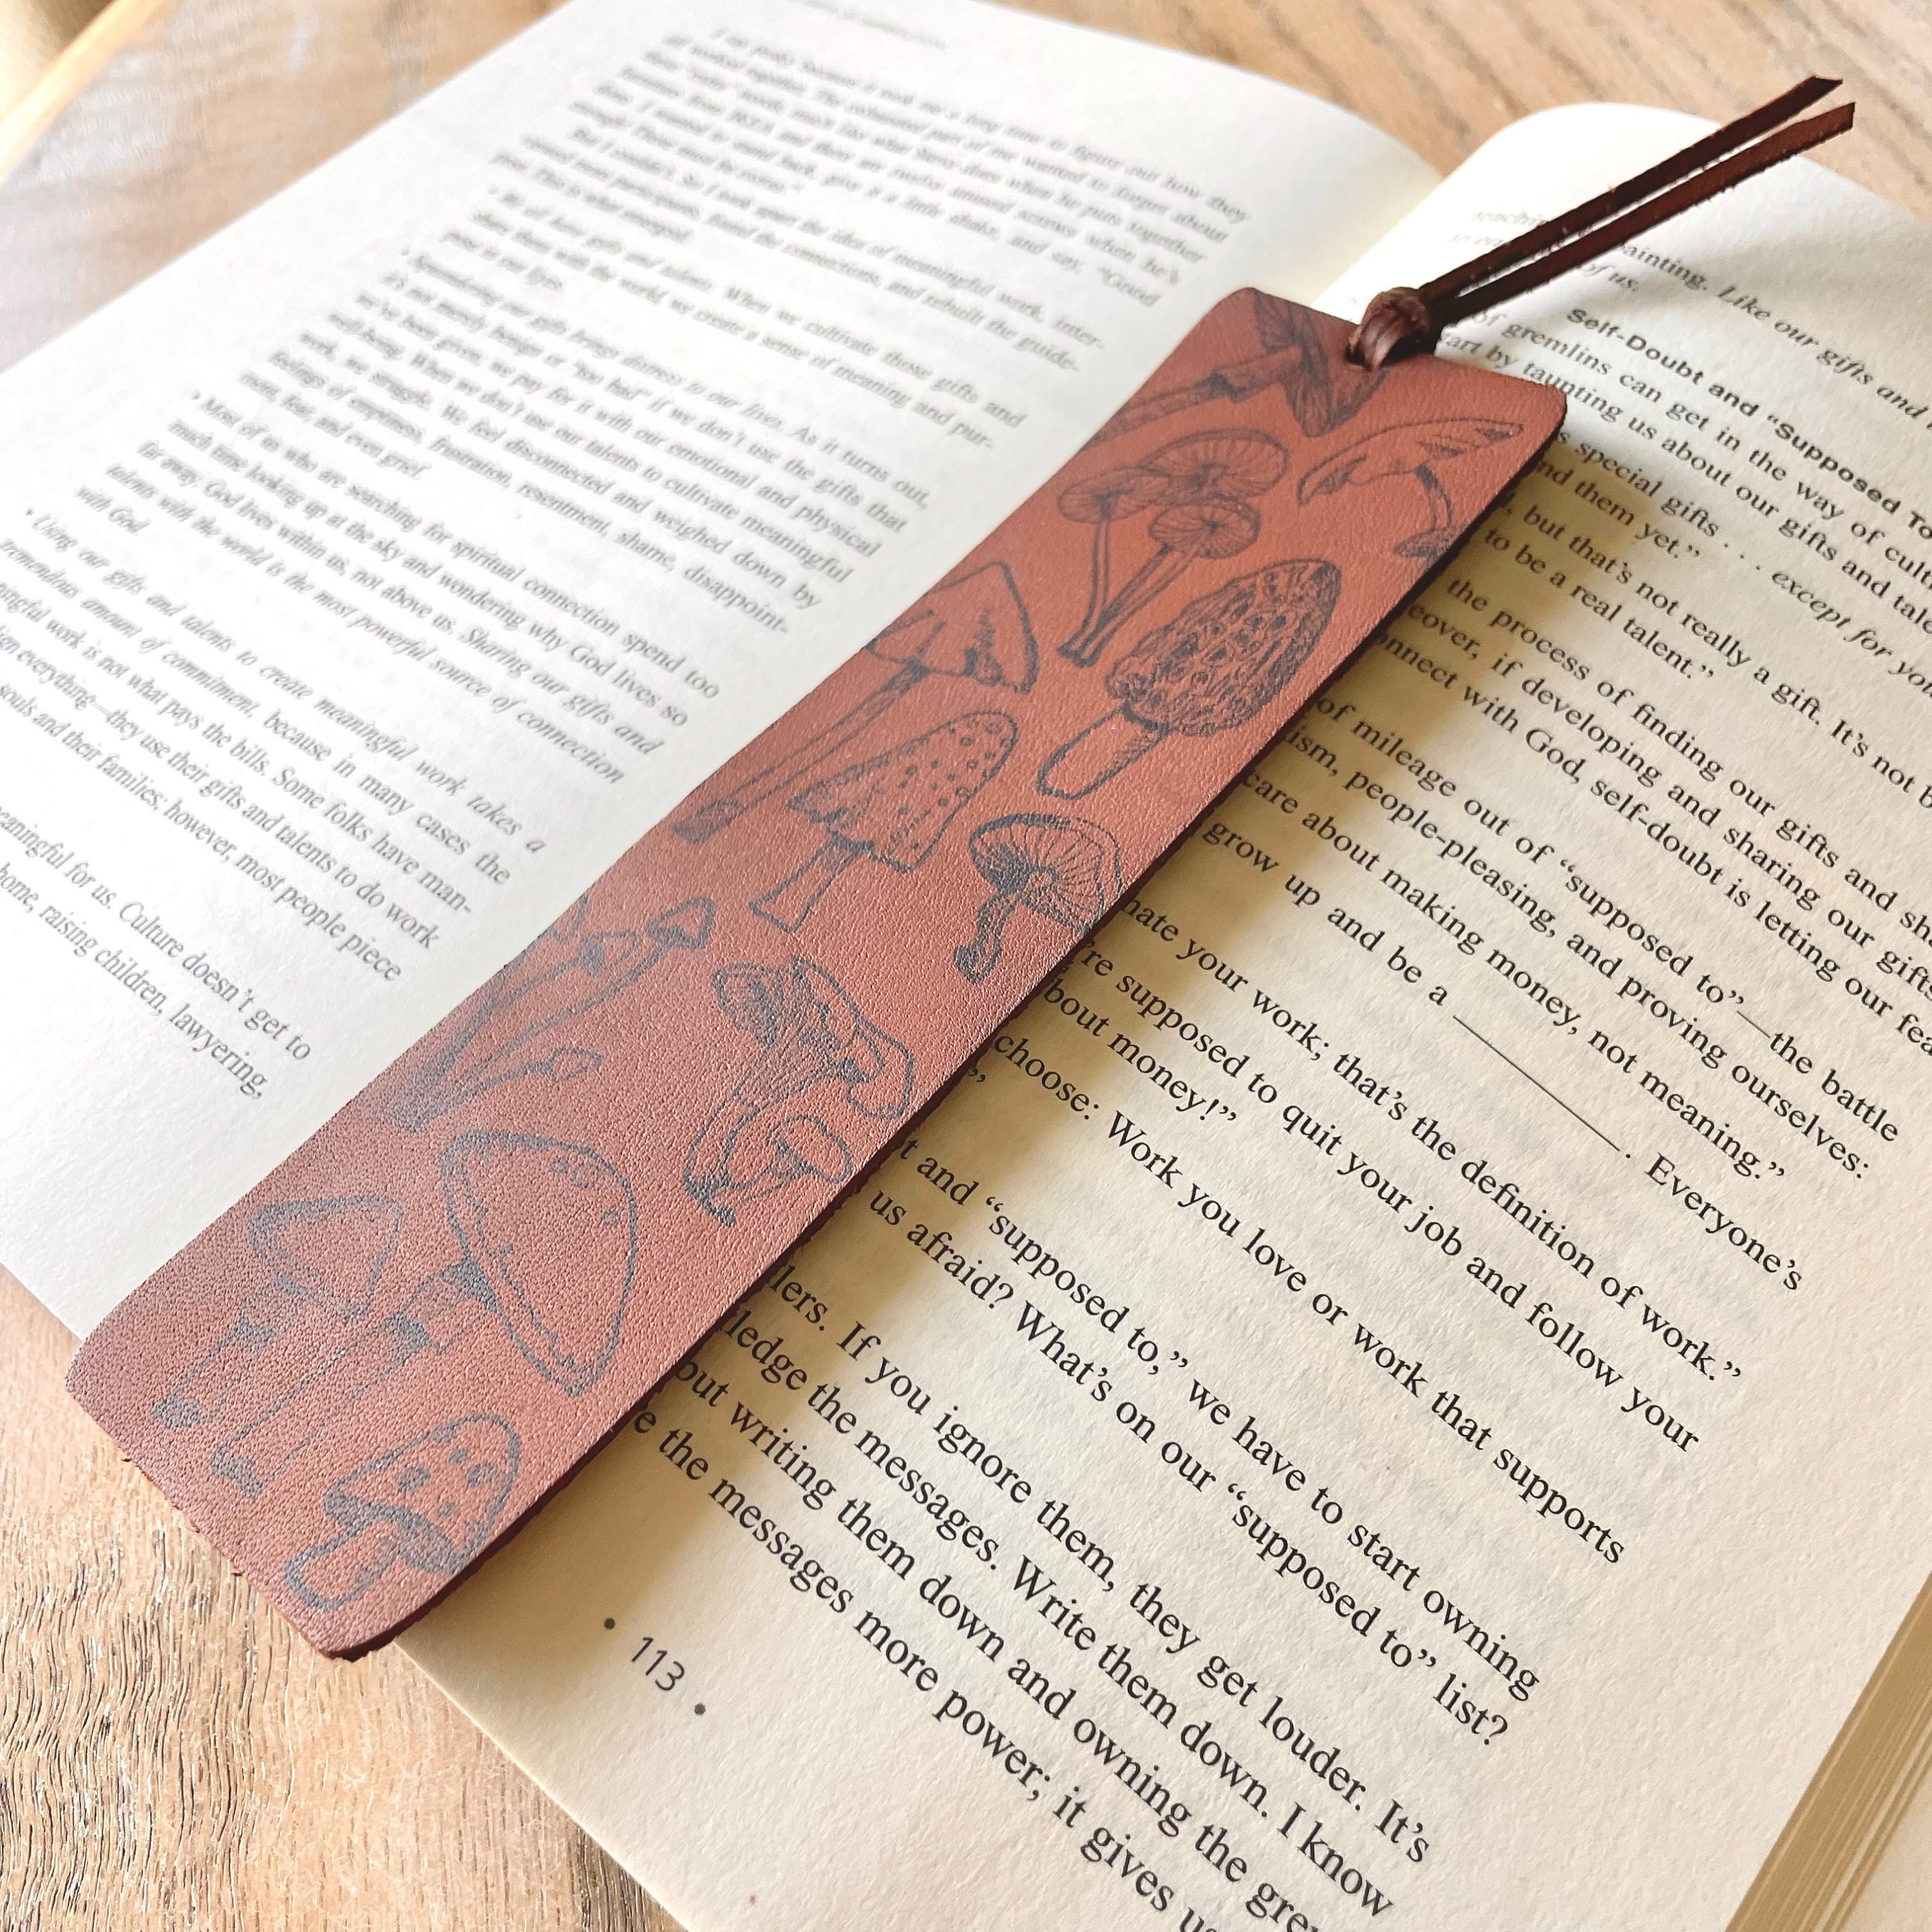 Mushroom Bookmark — Brown Suga Stationery & Design